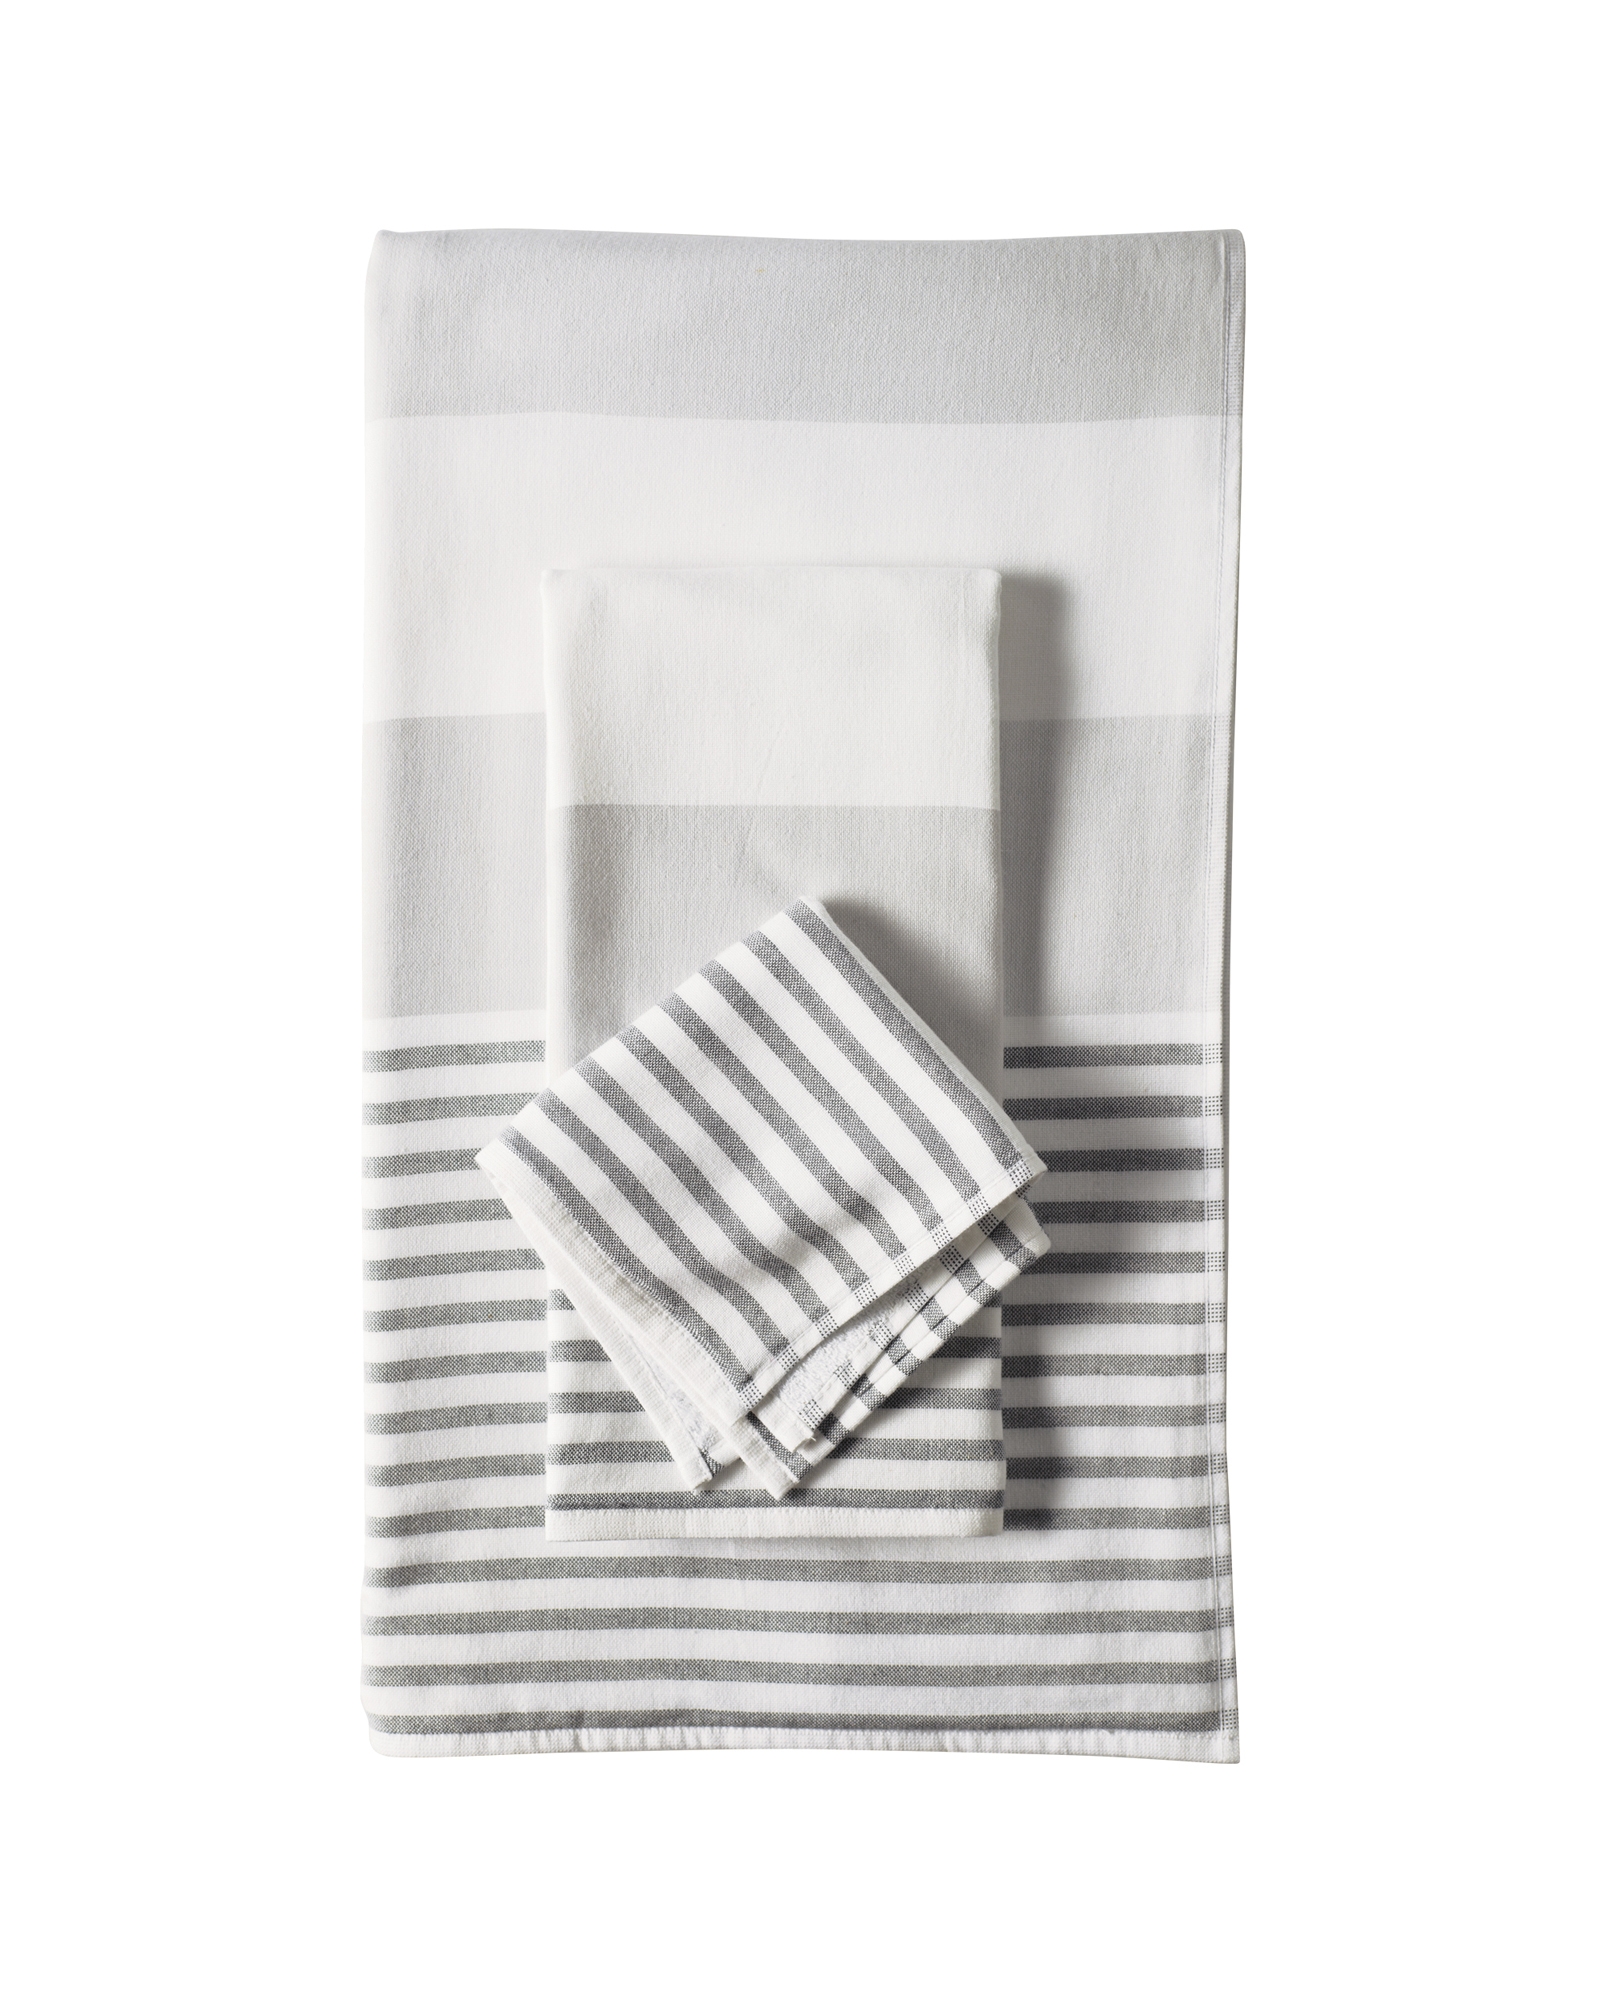 Fouta Washcloth -Dove Grey- Hand Towel - Image 0